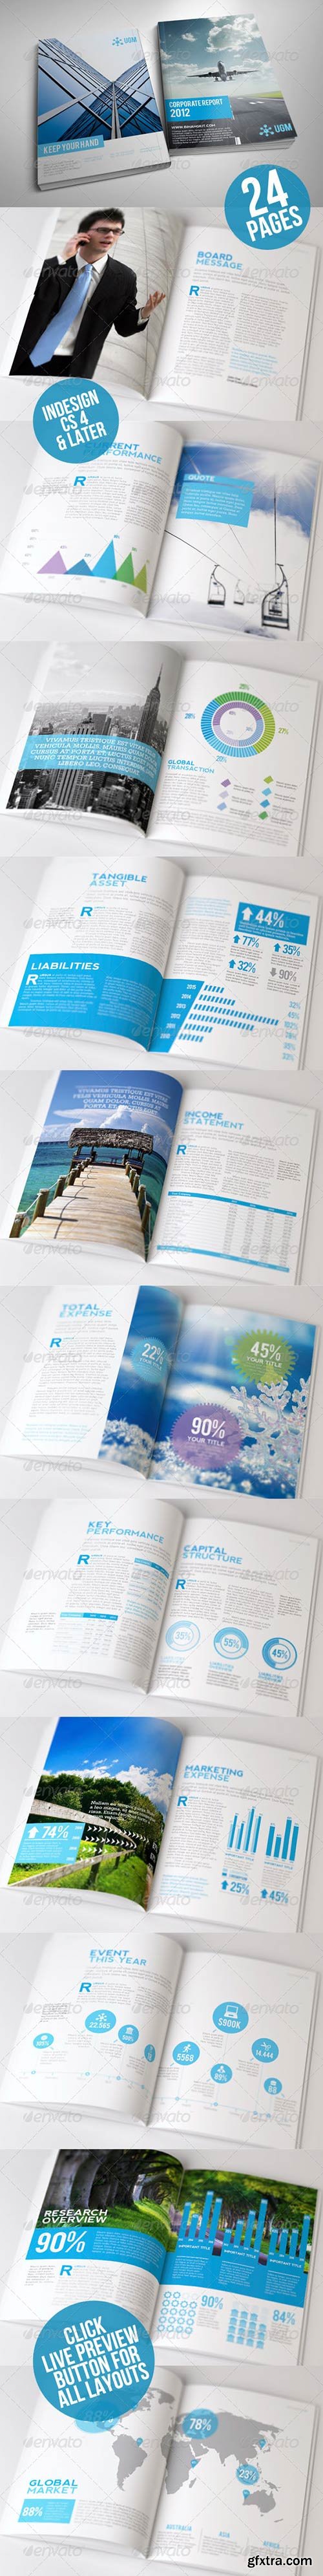 GraphicRiver - Kasongan Company Annual Report Volume 2